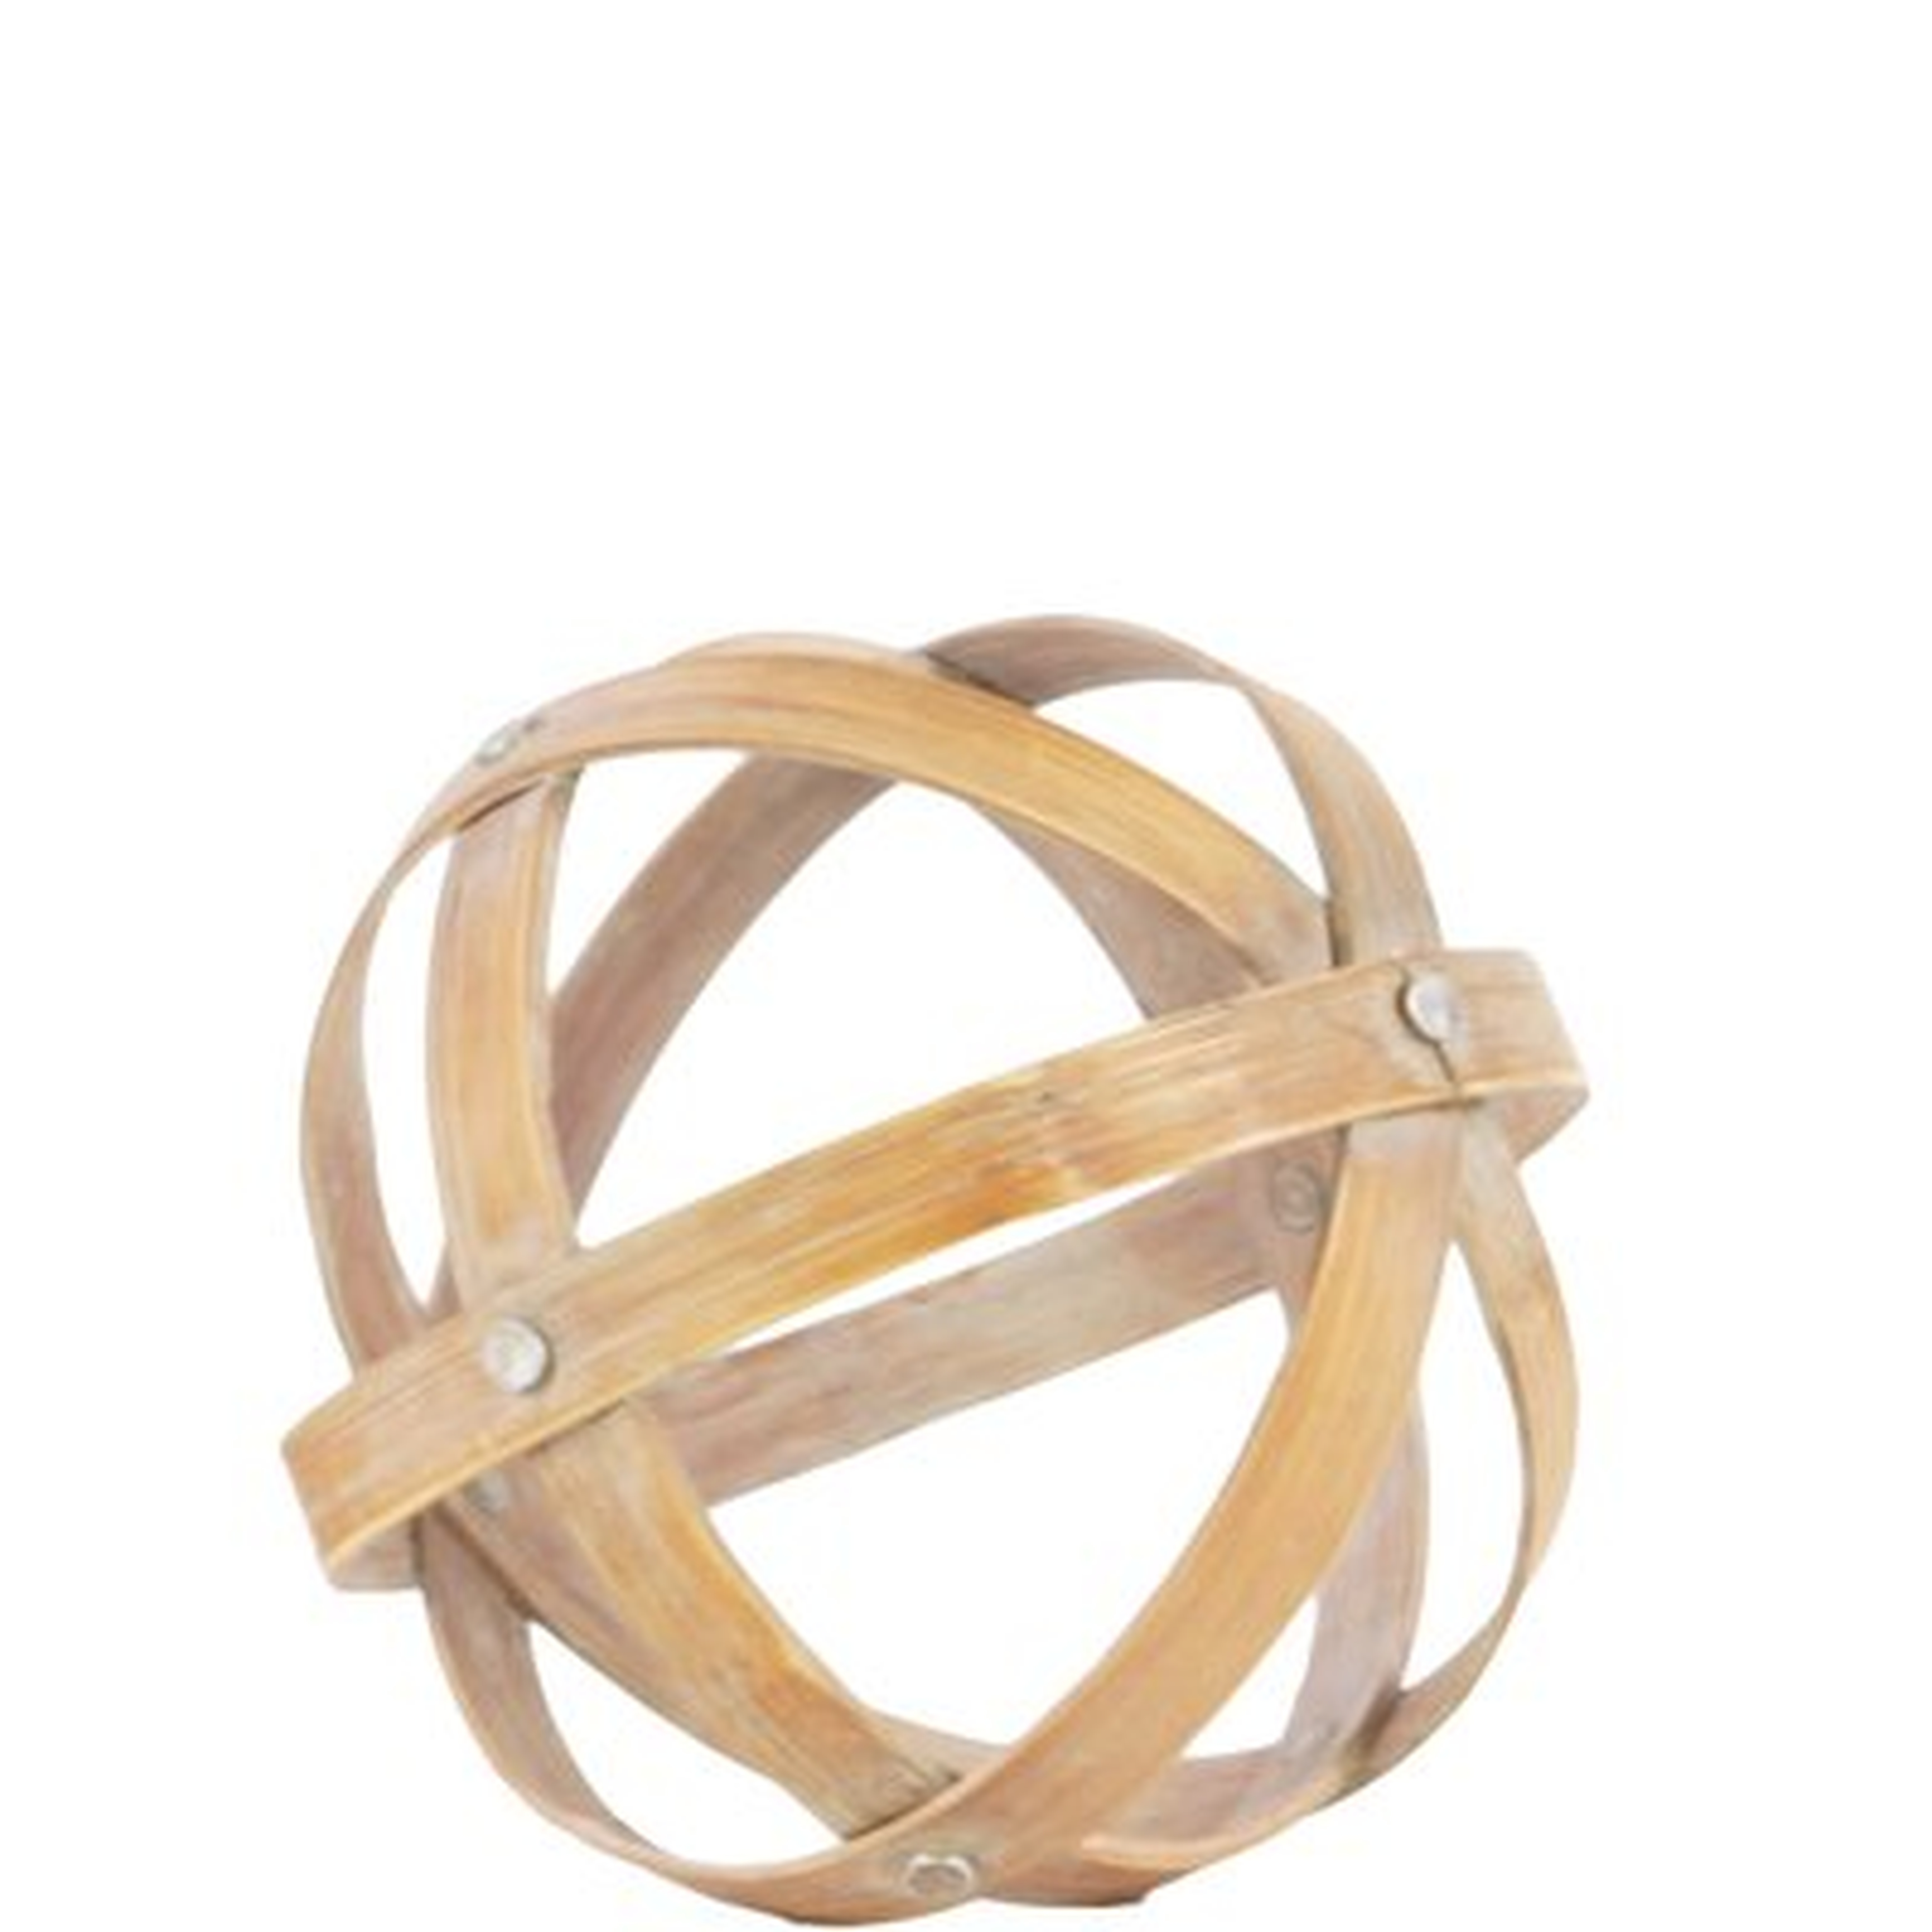 Bamboo Orb Dyson Sphere Sculpture - Wayfair